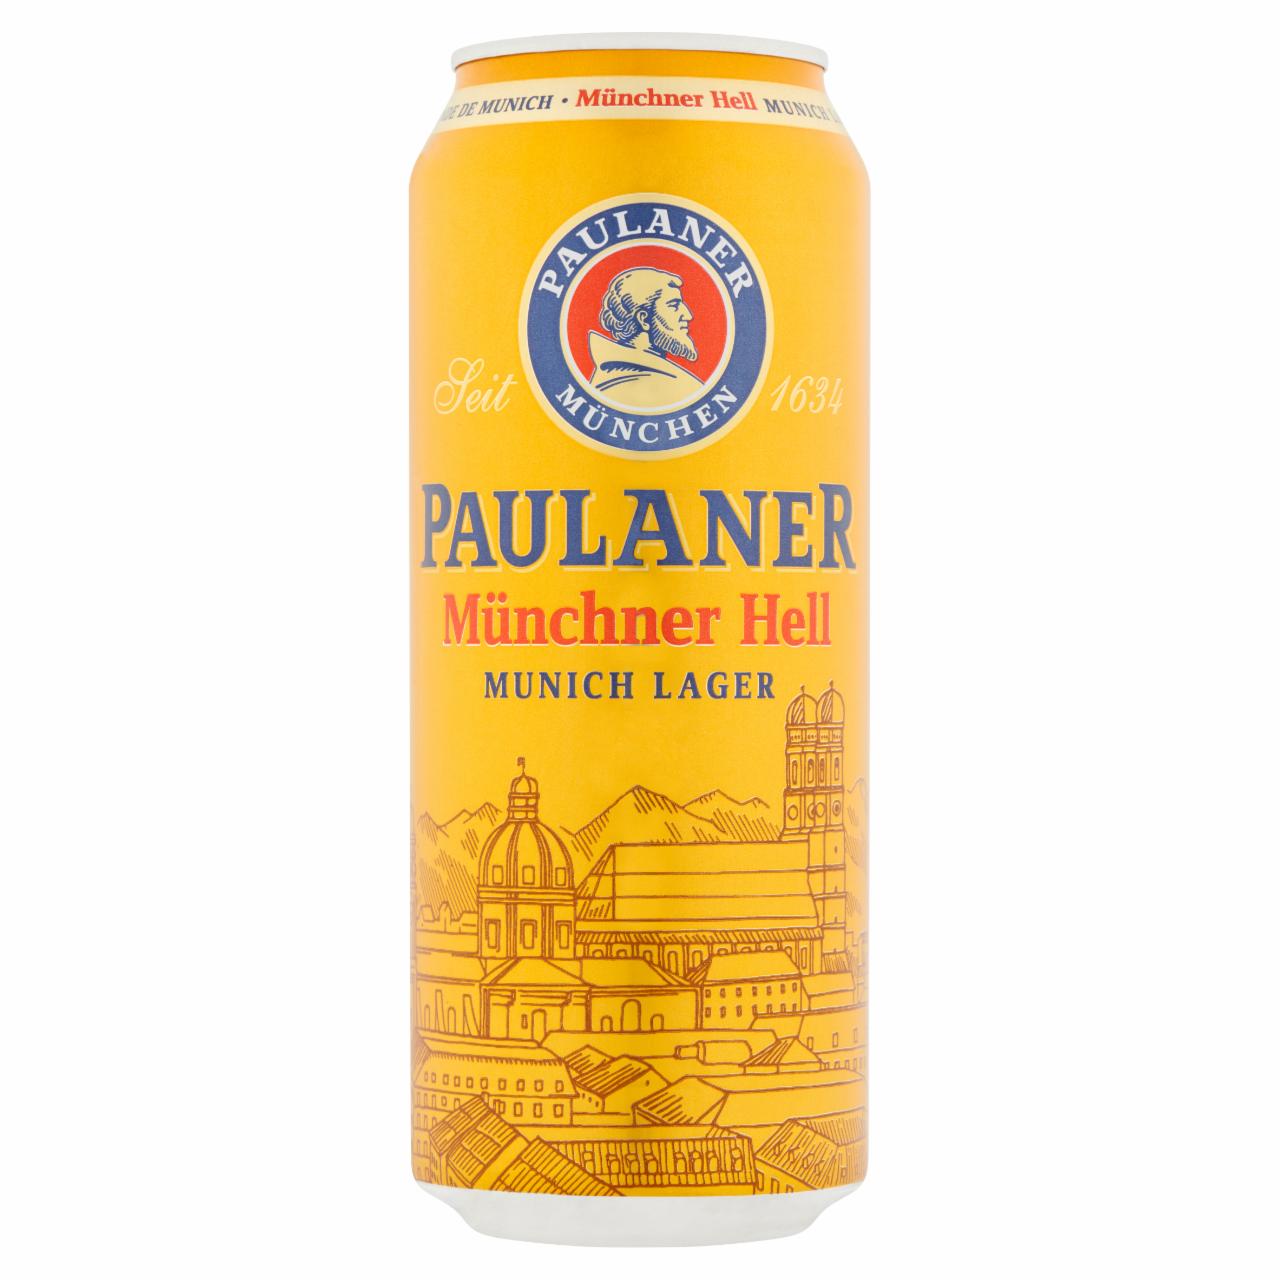 Képek - Paulaner Münchner Hell német világos sör 4,9% 0,5 l